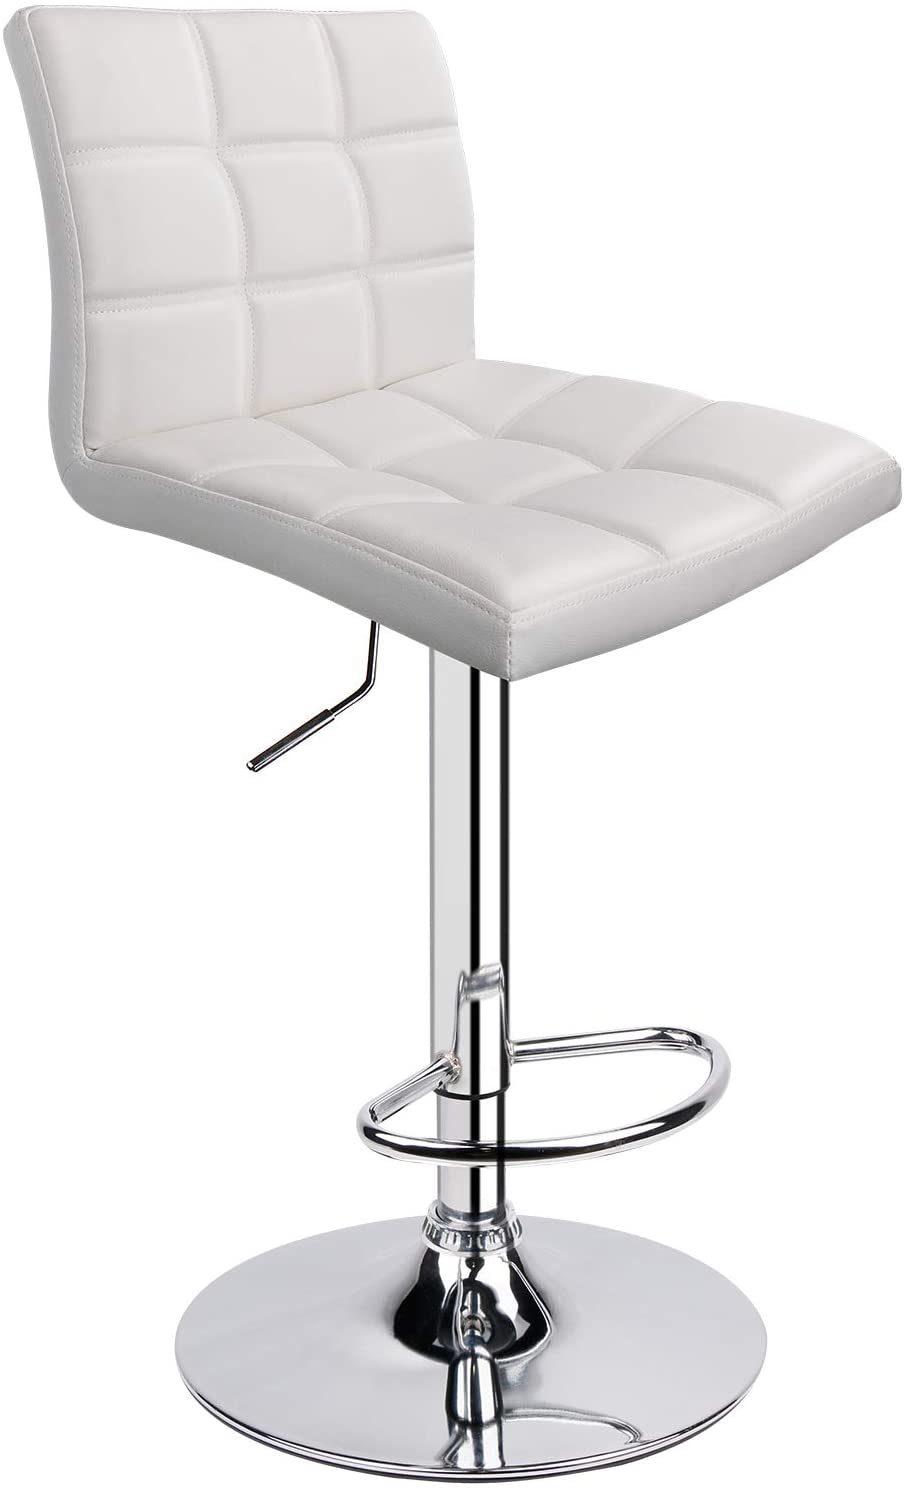 PU Leather Adjustable Bar Stool Crescent Shaped Backrest Bar Chair Stool